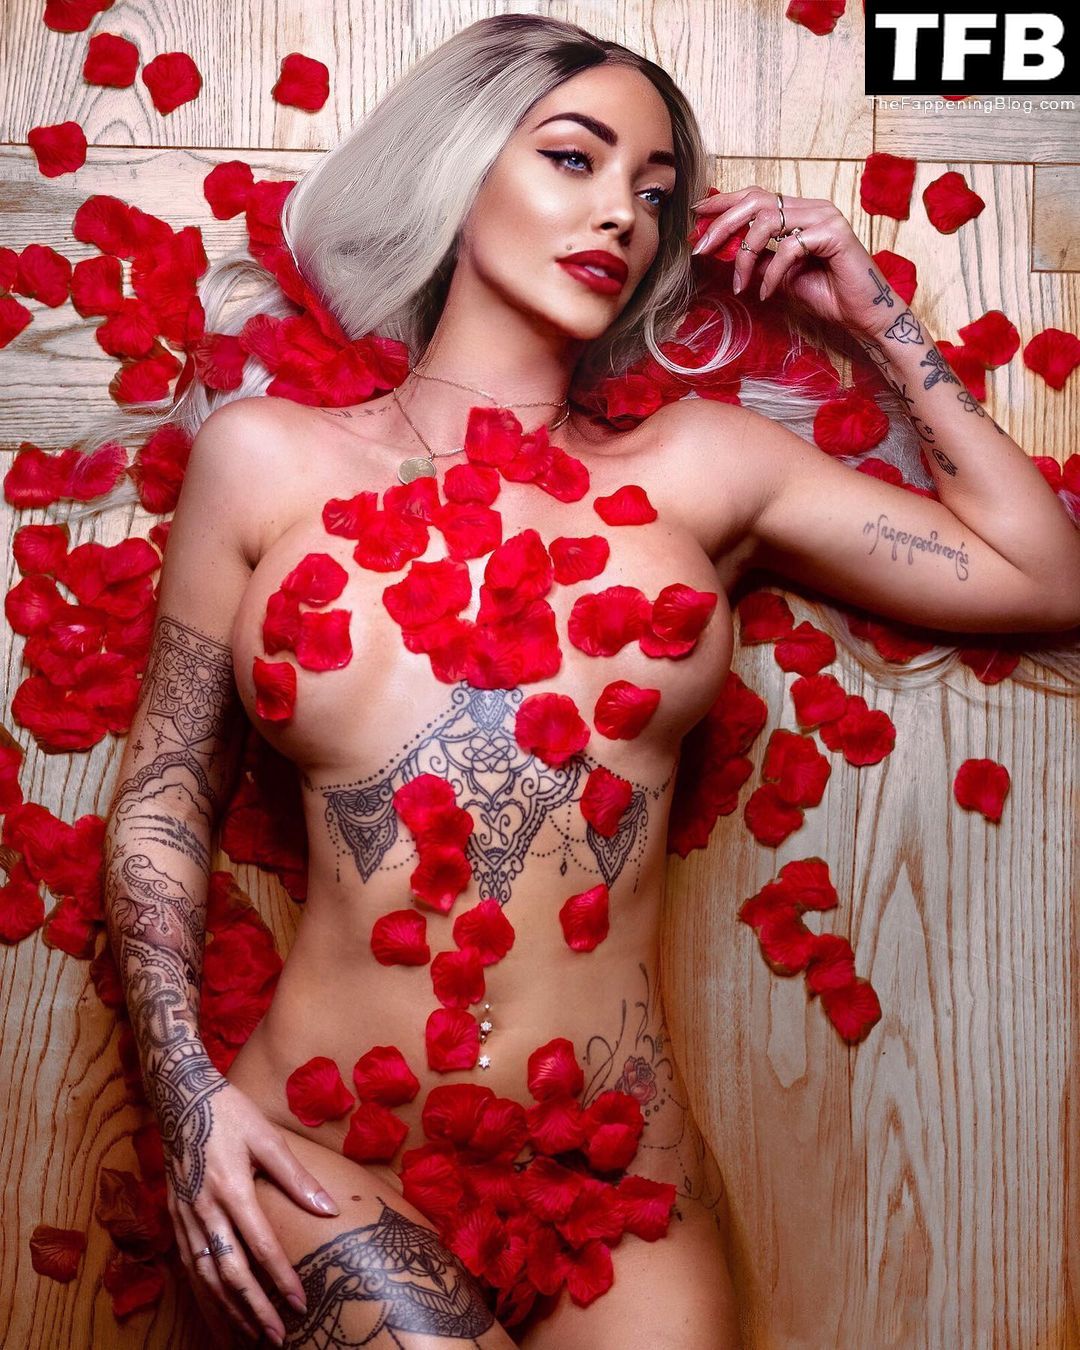 Dorien-Rose-Duinker-Nude-Sexy-The-Fappening-Blog-6.jpg